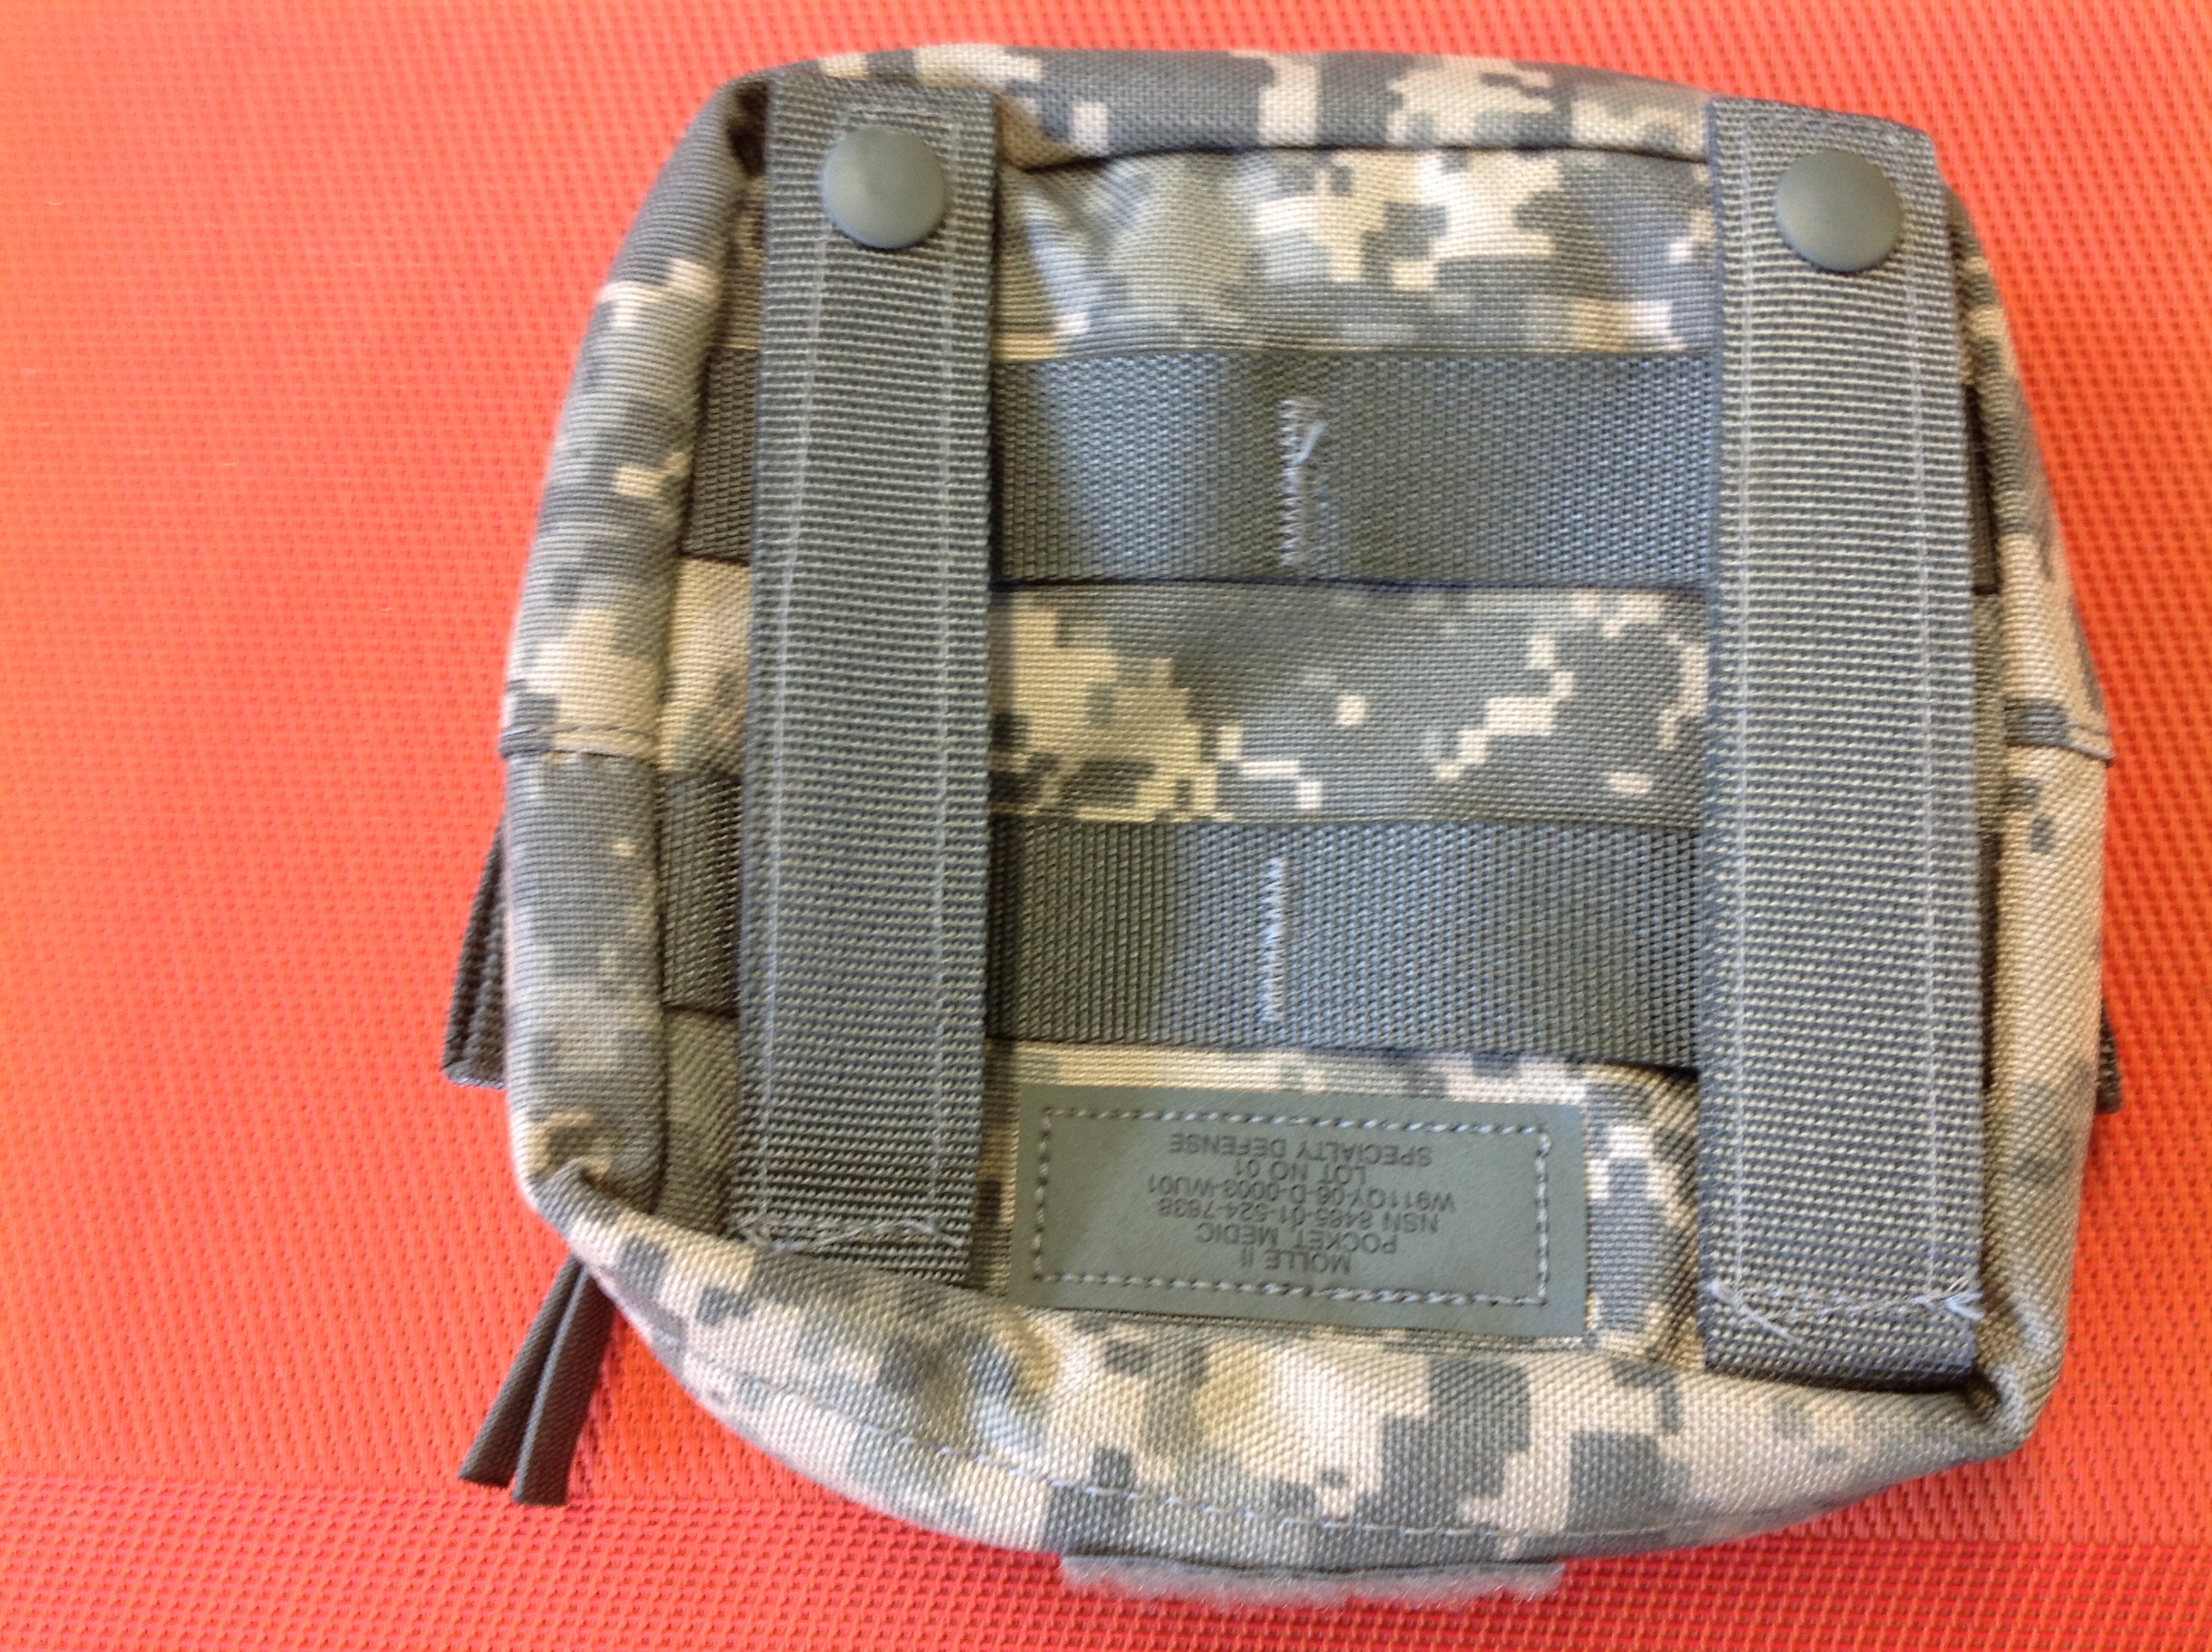 US Army Medic Bag in ACU Tarn Pocket Bag - Erste Hilfe Tasche